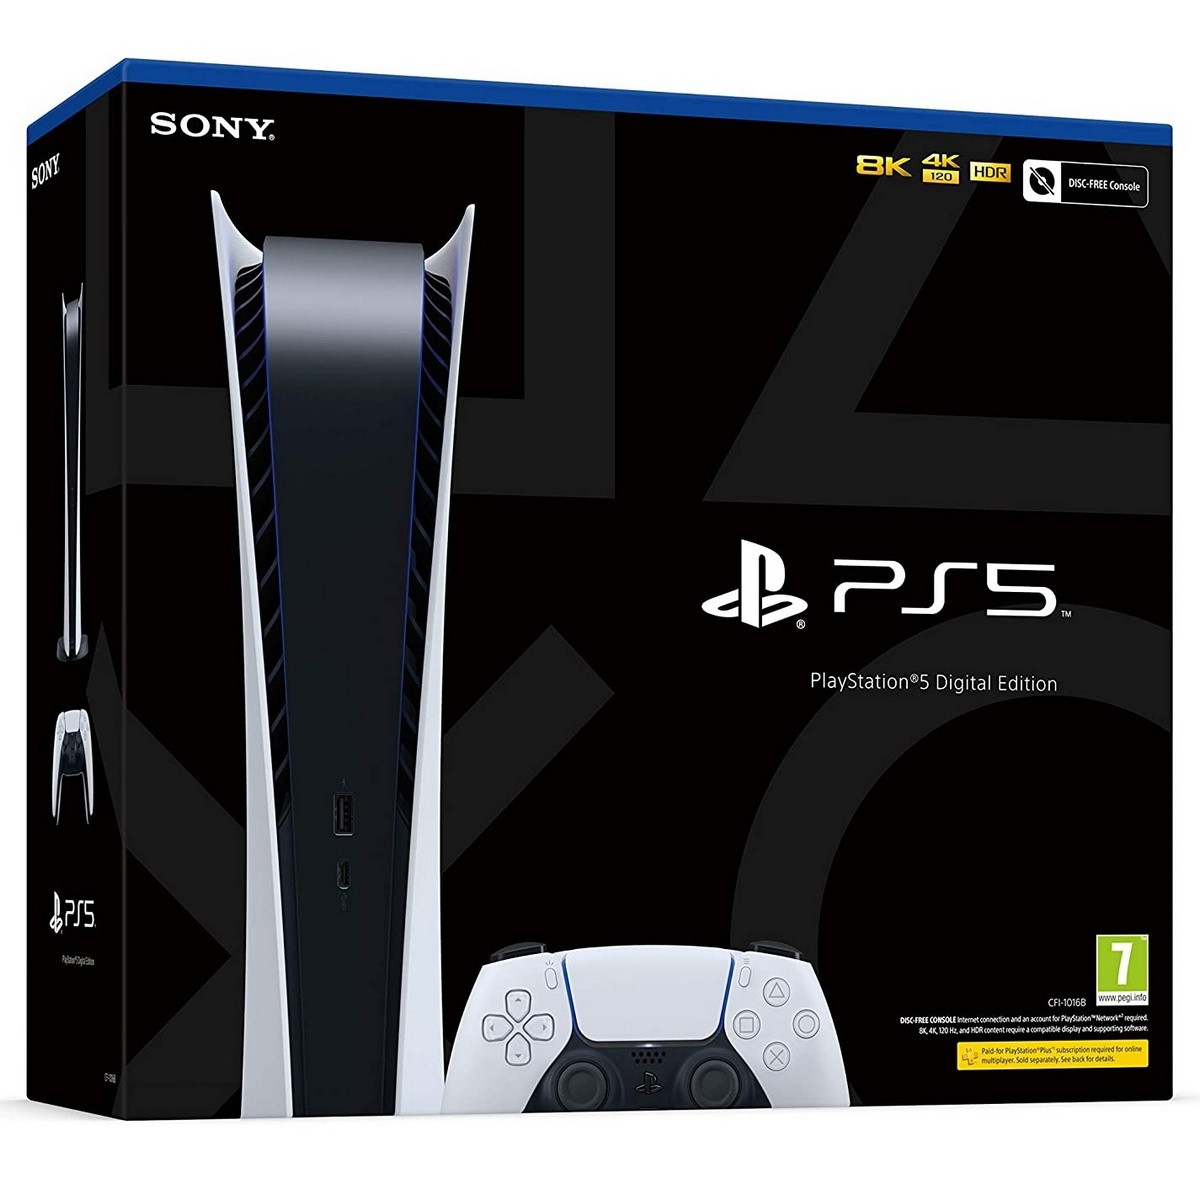 PS5 PlayStation 5 Digital Edition - White, 825 GB SSD